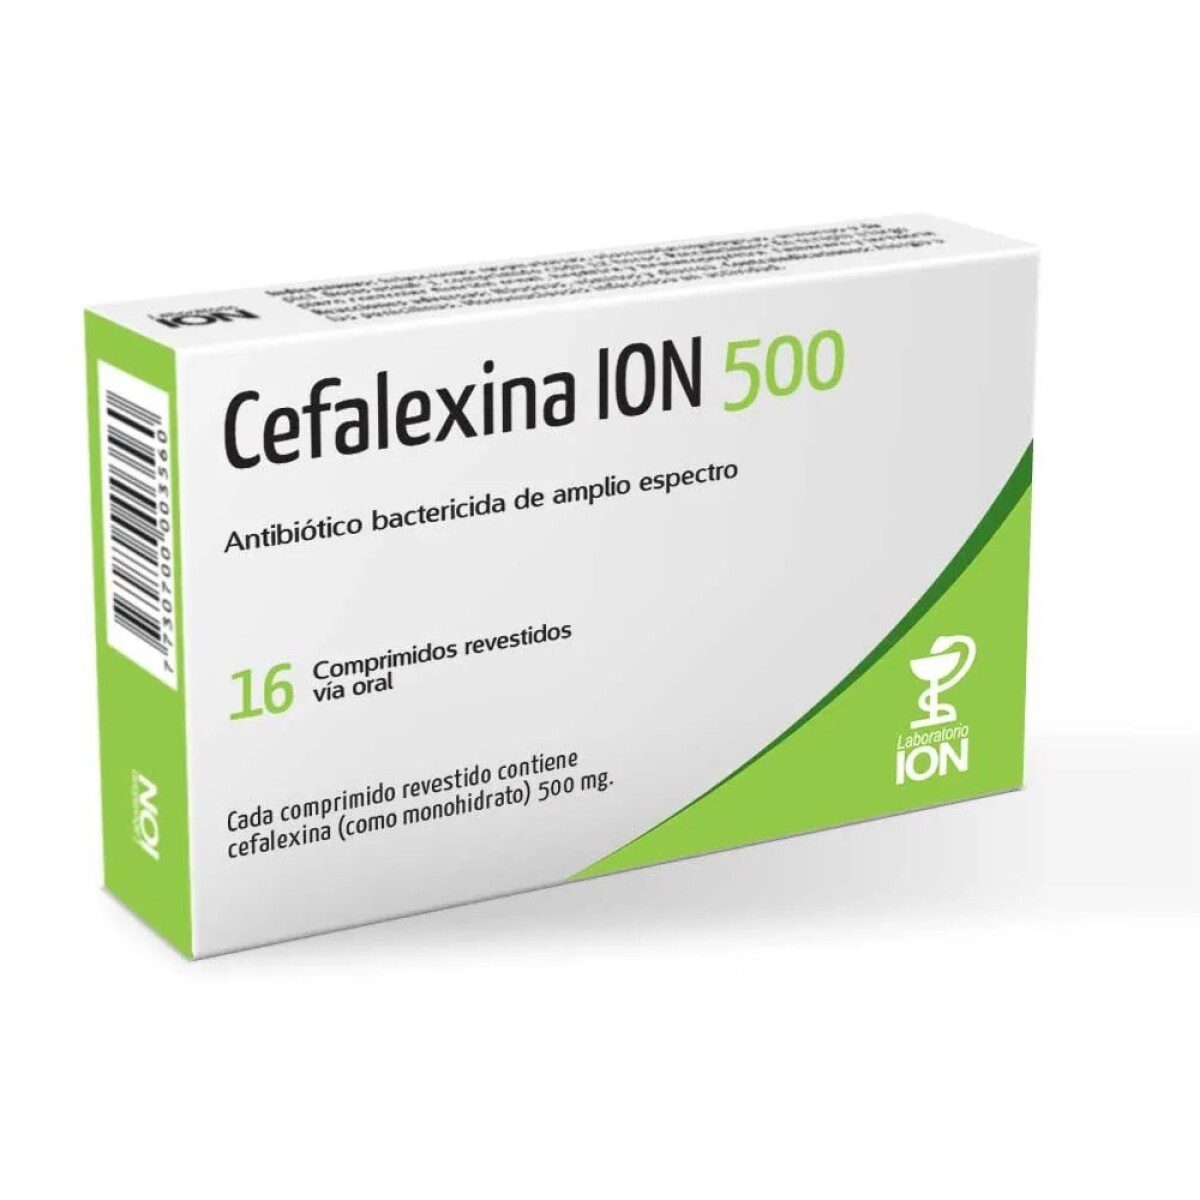 Achetez Cephalexin en ligne